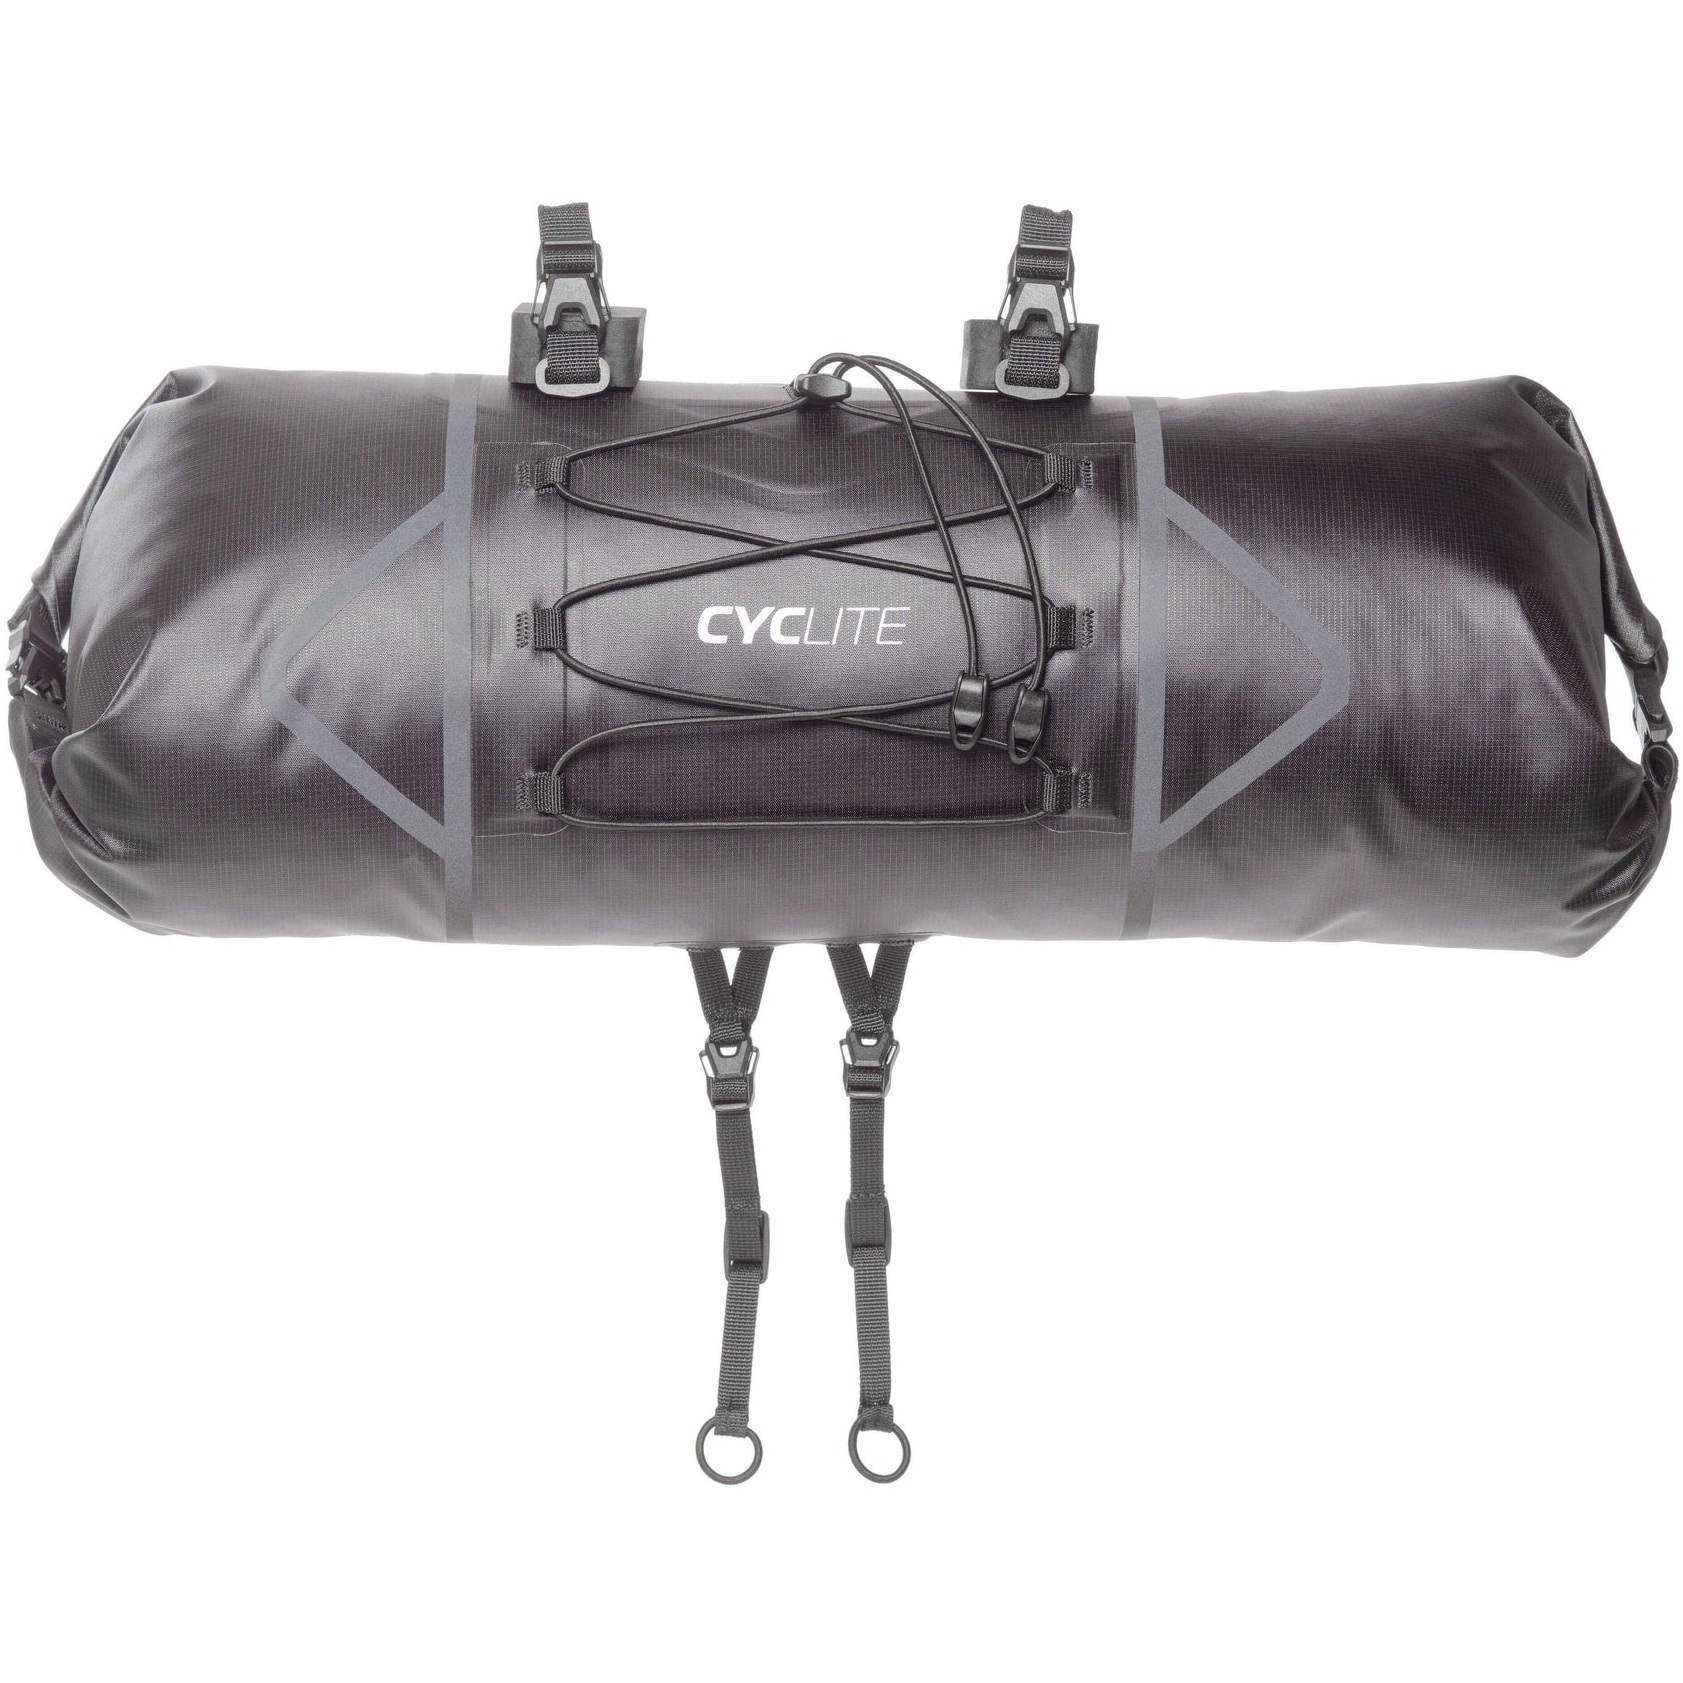 Productfoto van Cyclite Roll Bag Stuurtas 12,6L - Zwart